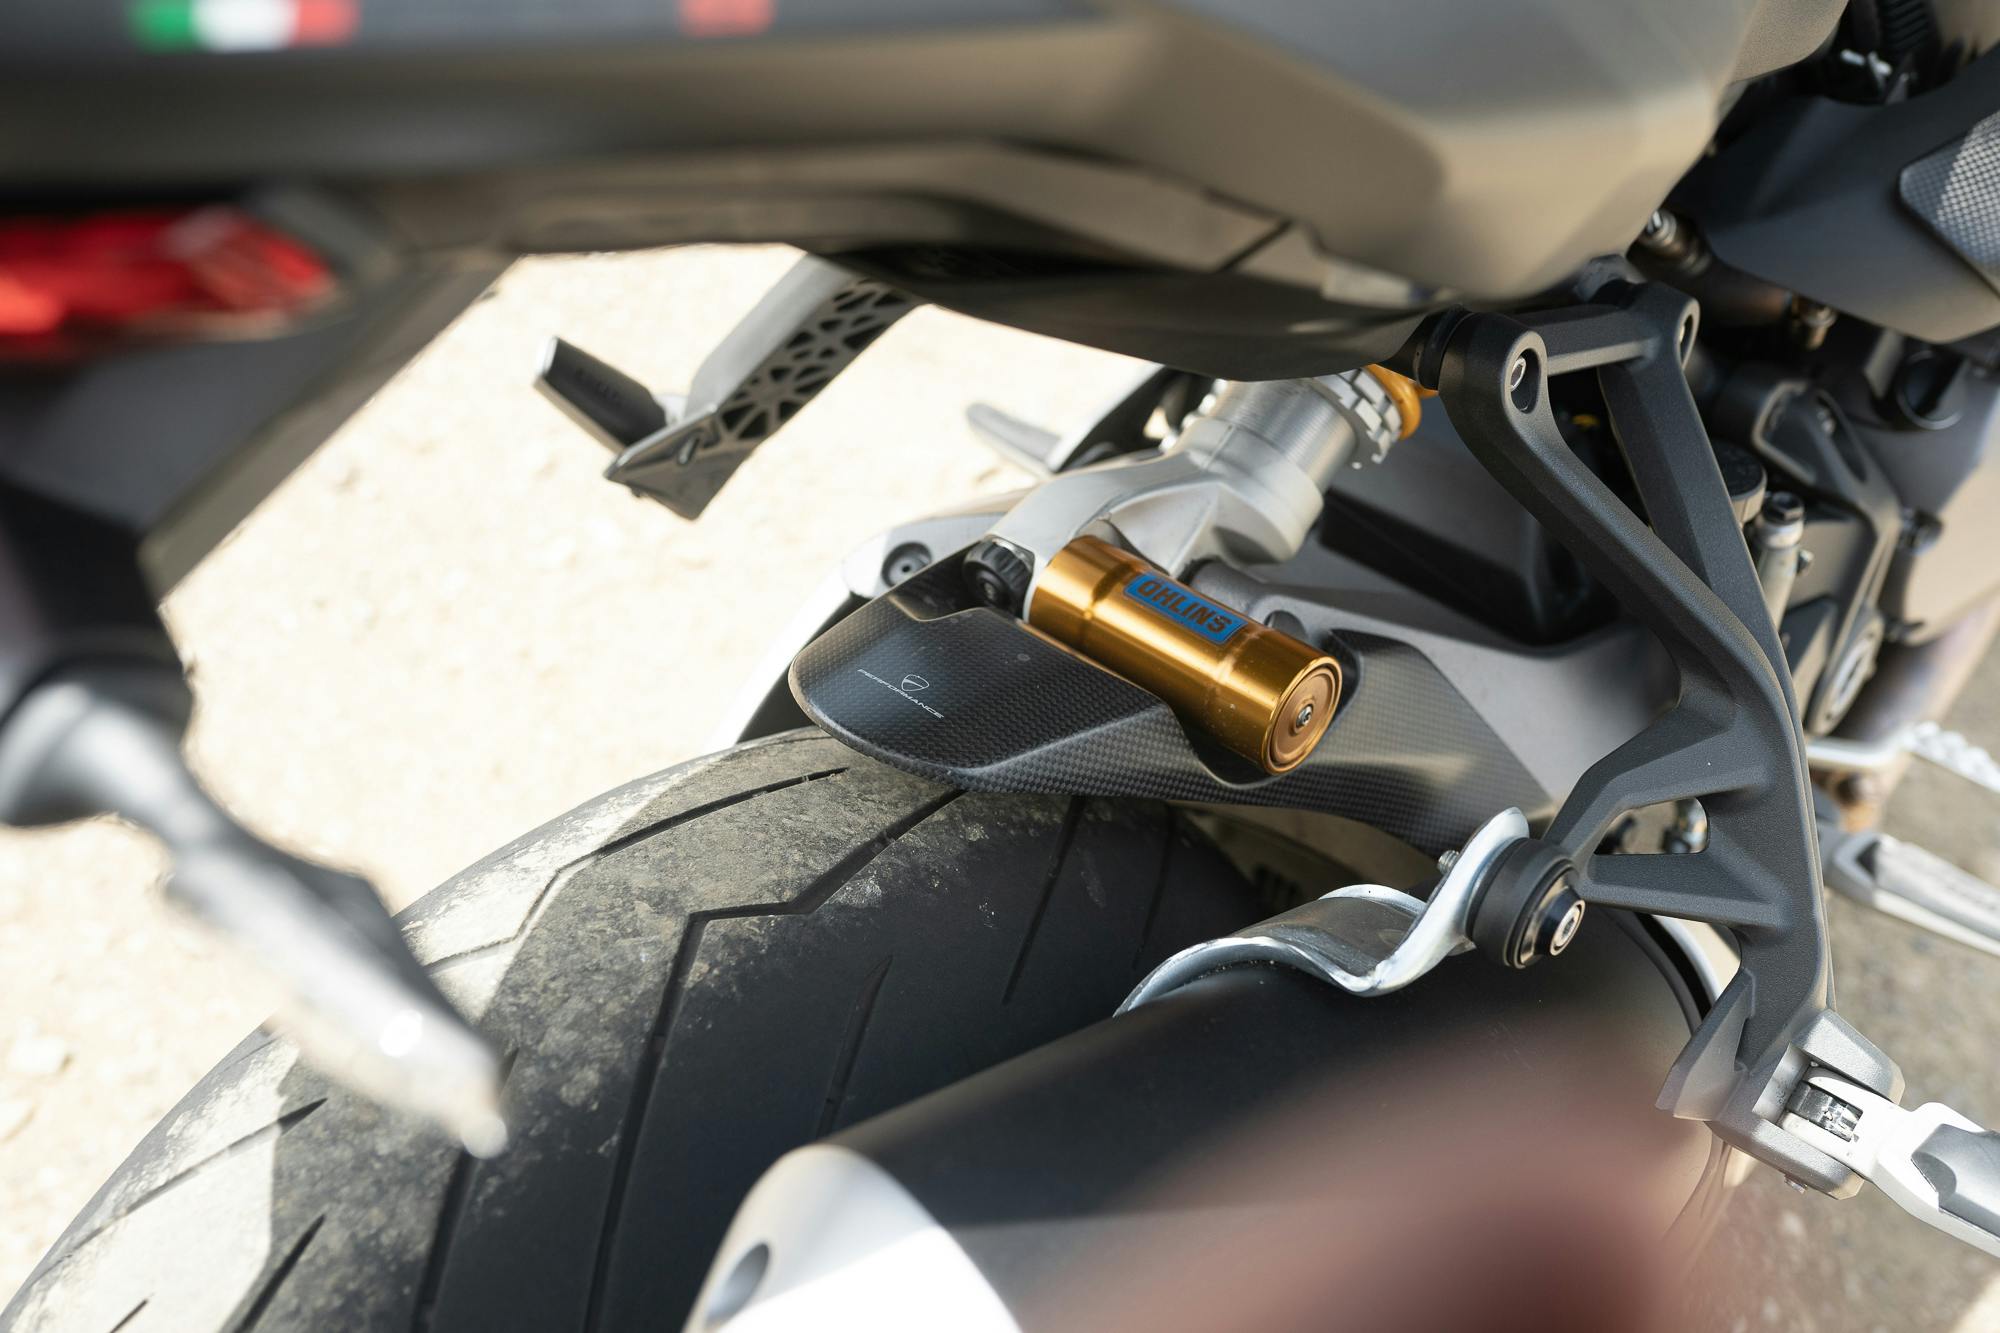 2021 Ducati Monster 1200 S rear suspension detail